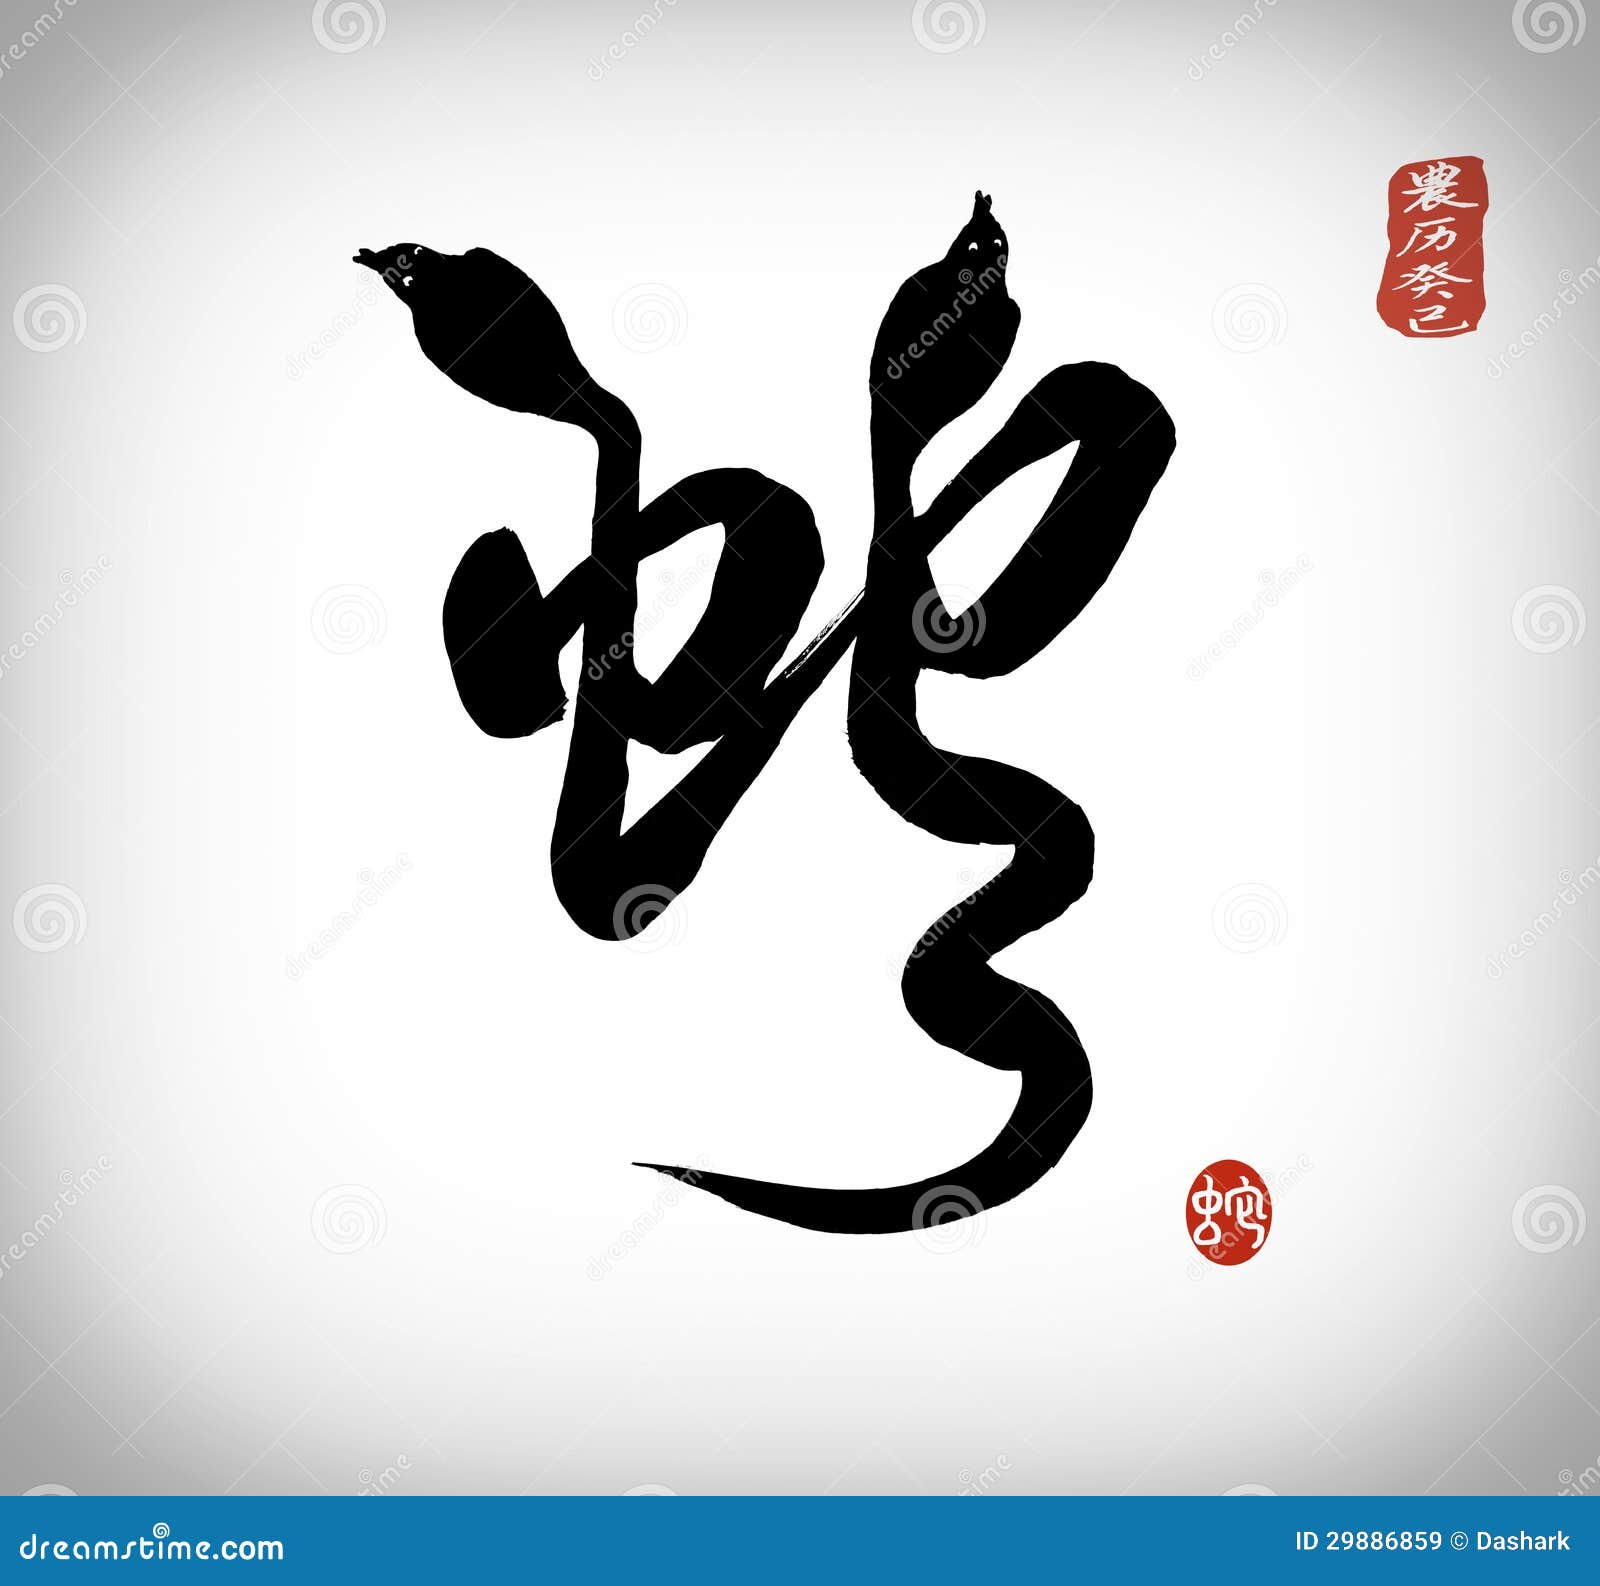 Змея на китайском. Змея каллиграфия. Китайская змея. Китайский иероглиф год змеи. Иероглиф змея на китайском.